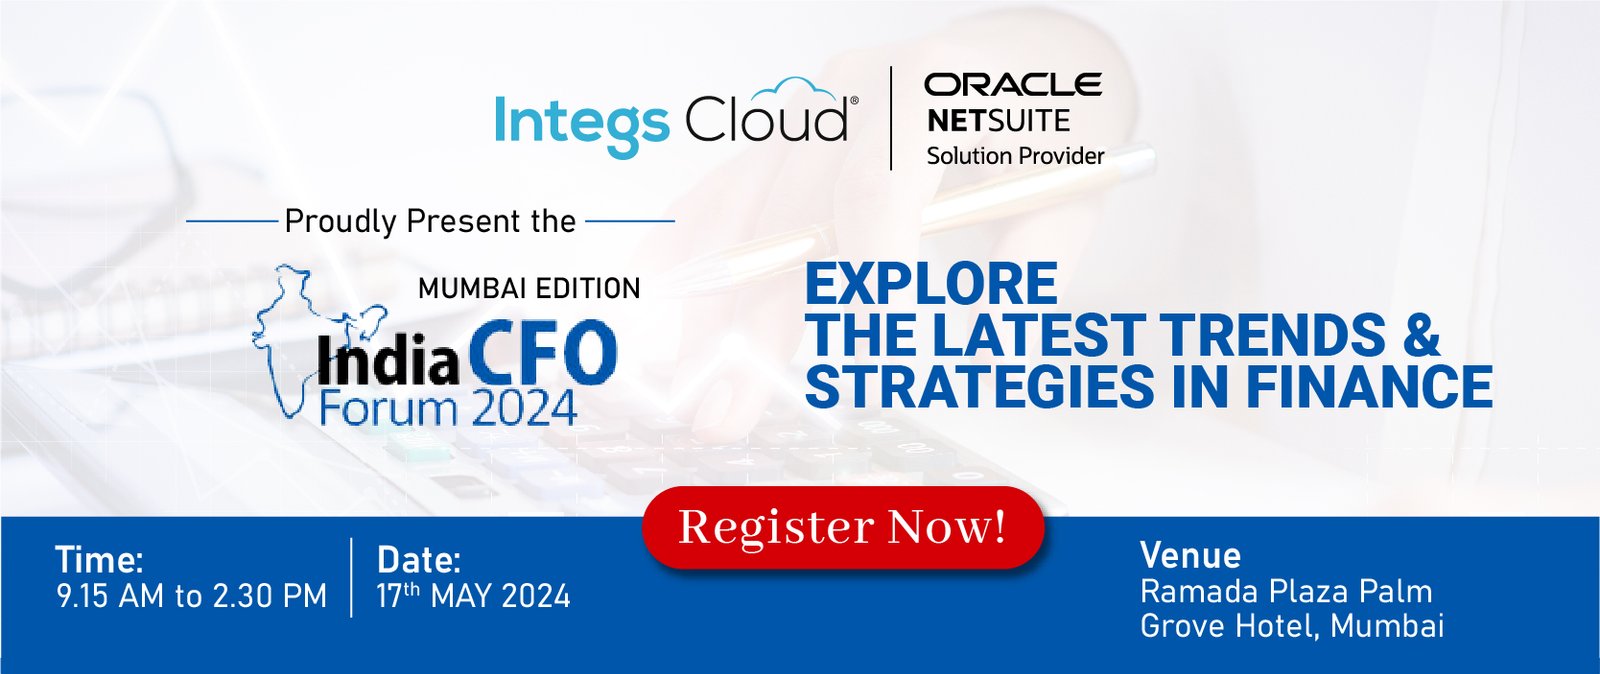 Oracle NetSuite & Integs Cloud proudly present the INDIA CFO FORUM 2024 Mumbai Edition